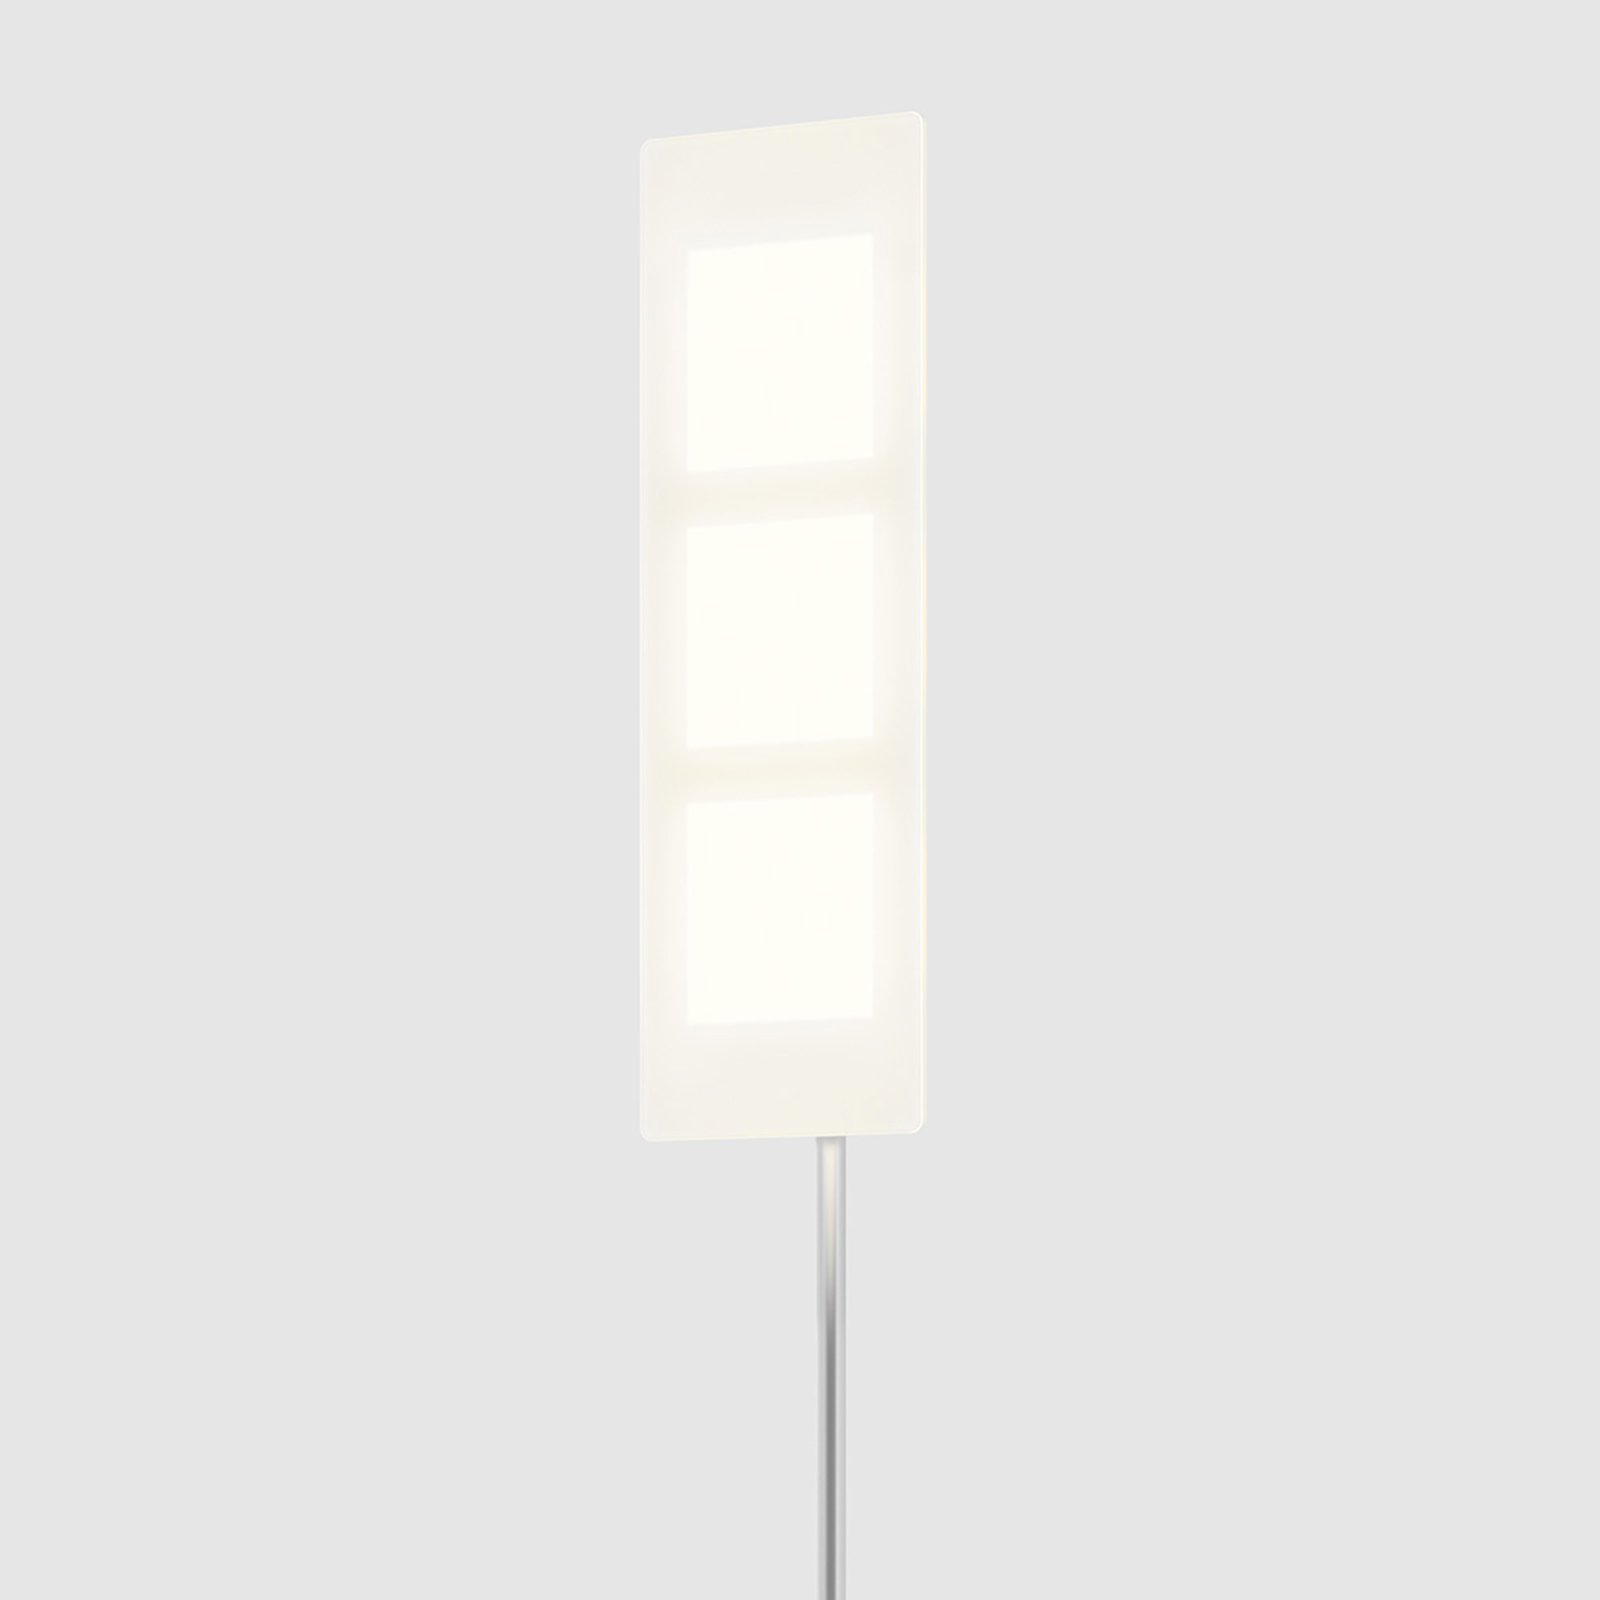 OMLED One f3 - OLED vloerlamp in Wit